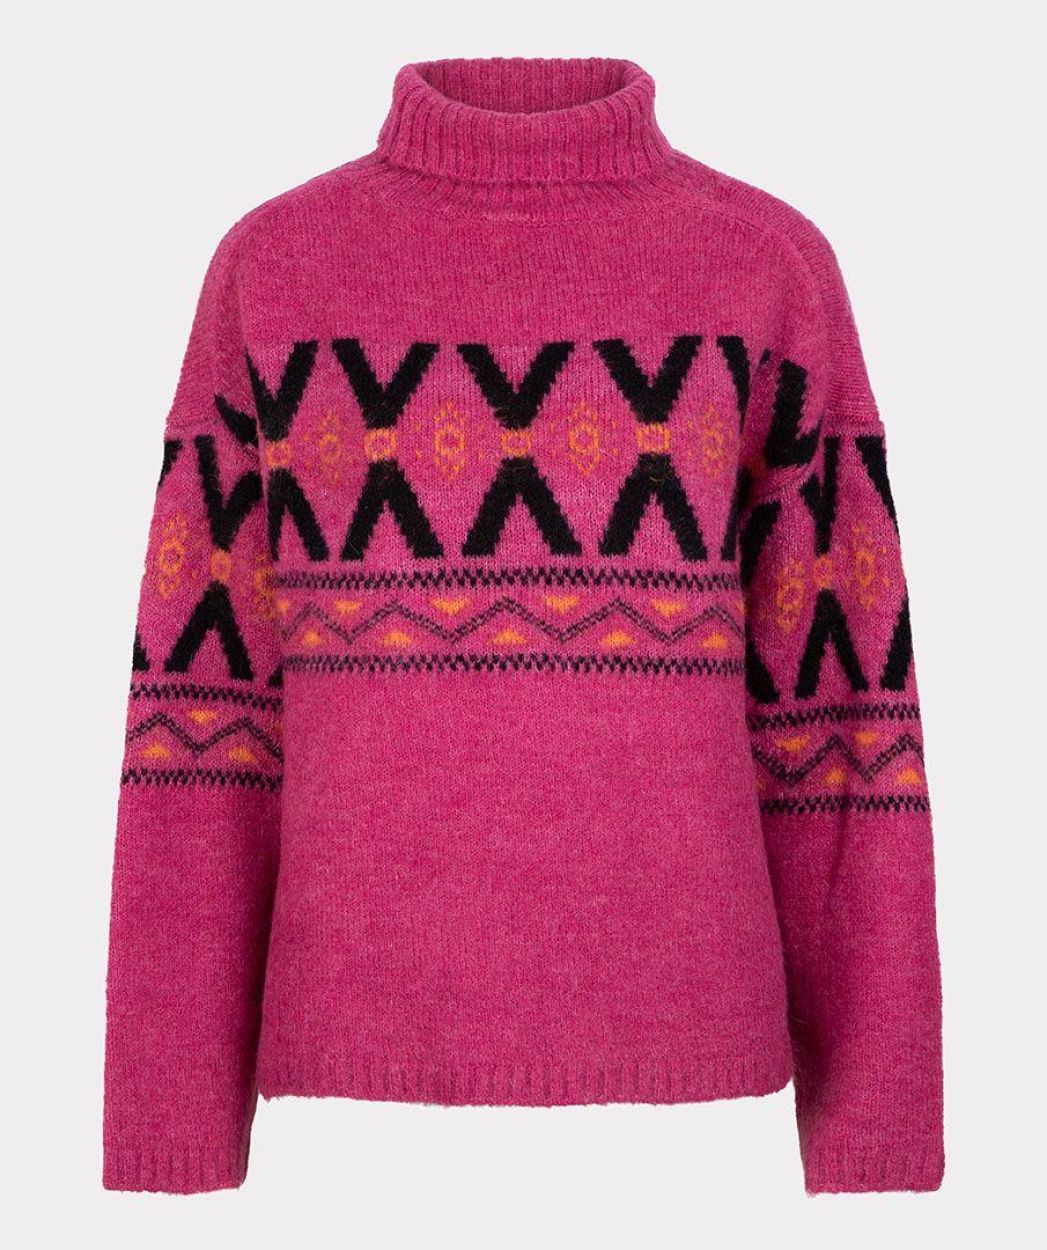 Esqualo Sweater intarsia knit (W22.07702/pink) - WeekendMode